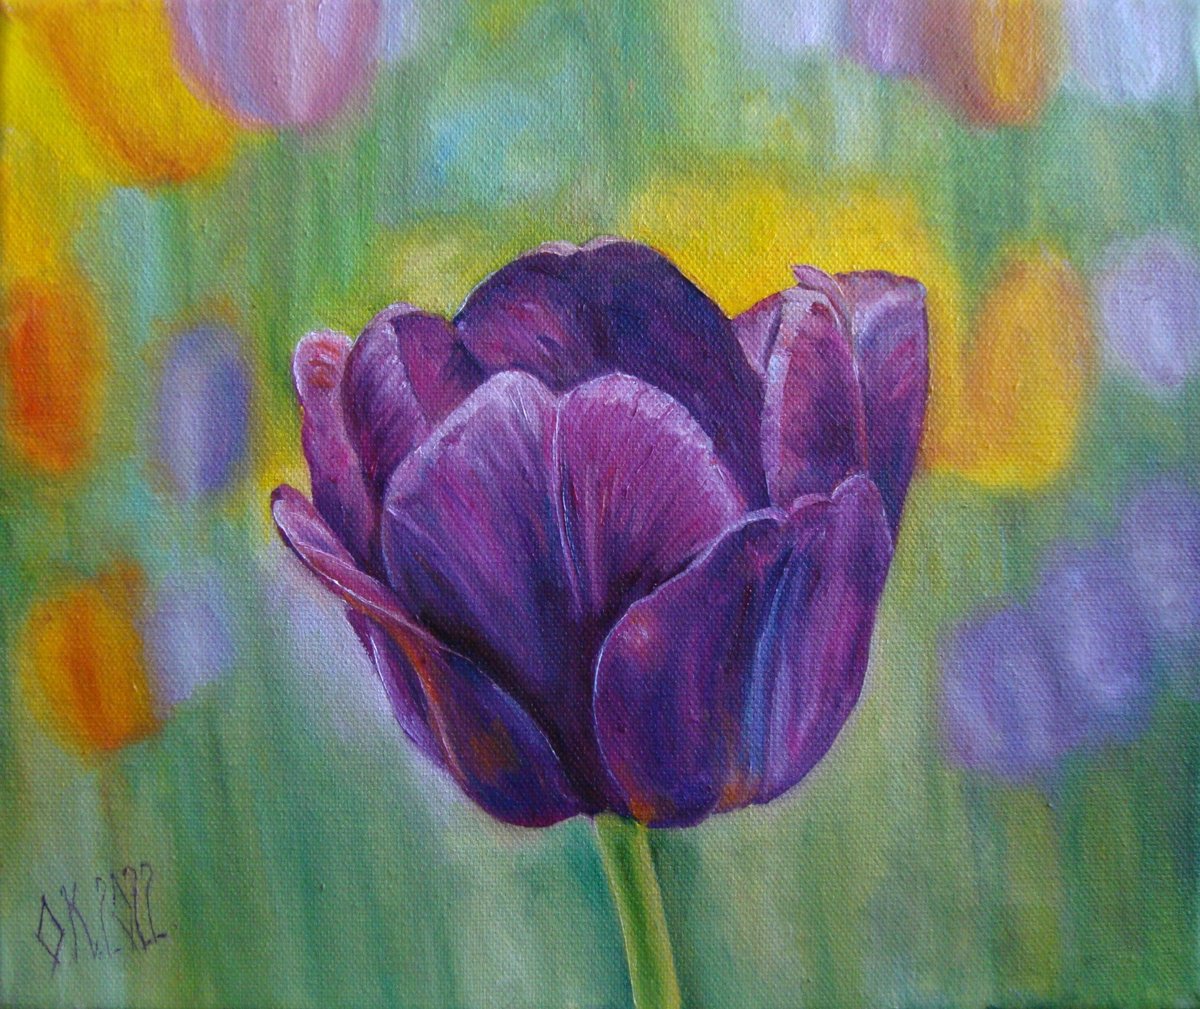 Whisper of the tulip by Olga Knezevic